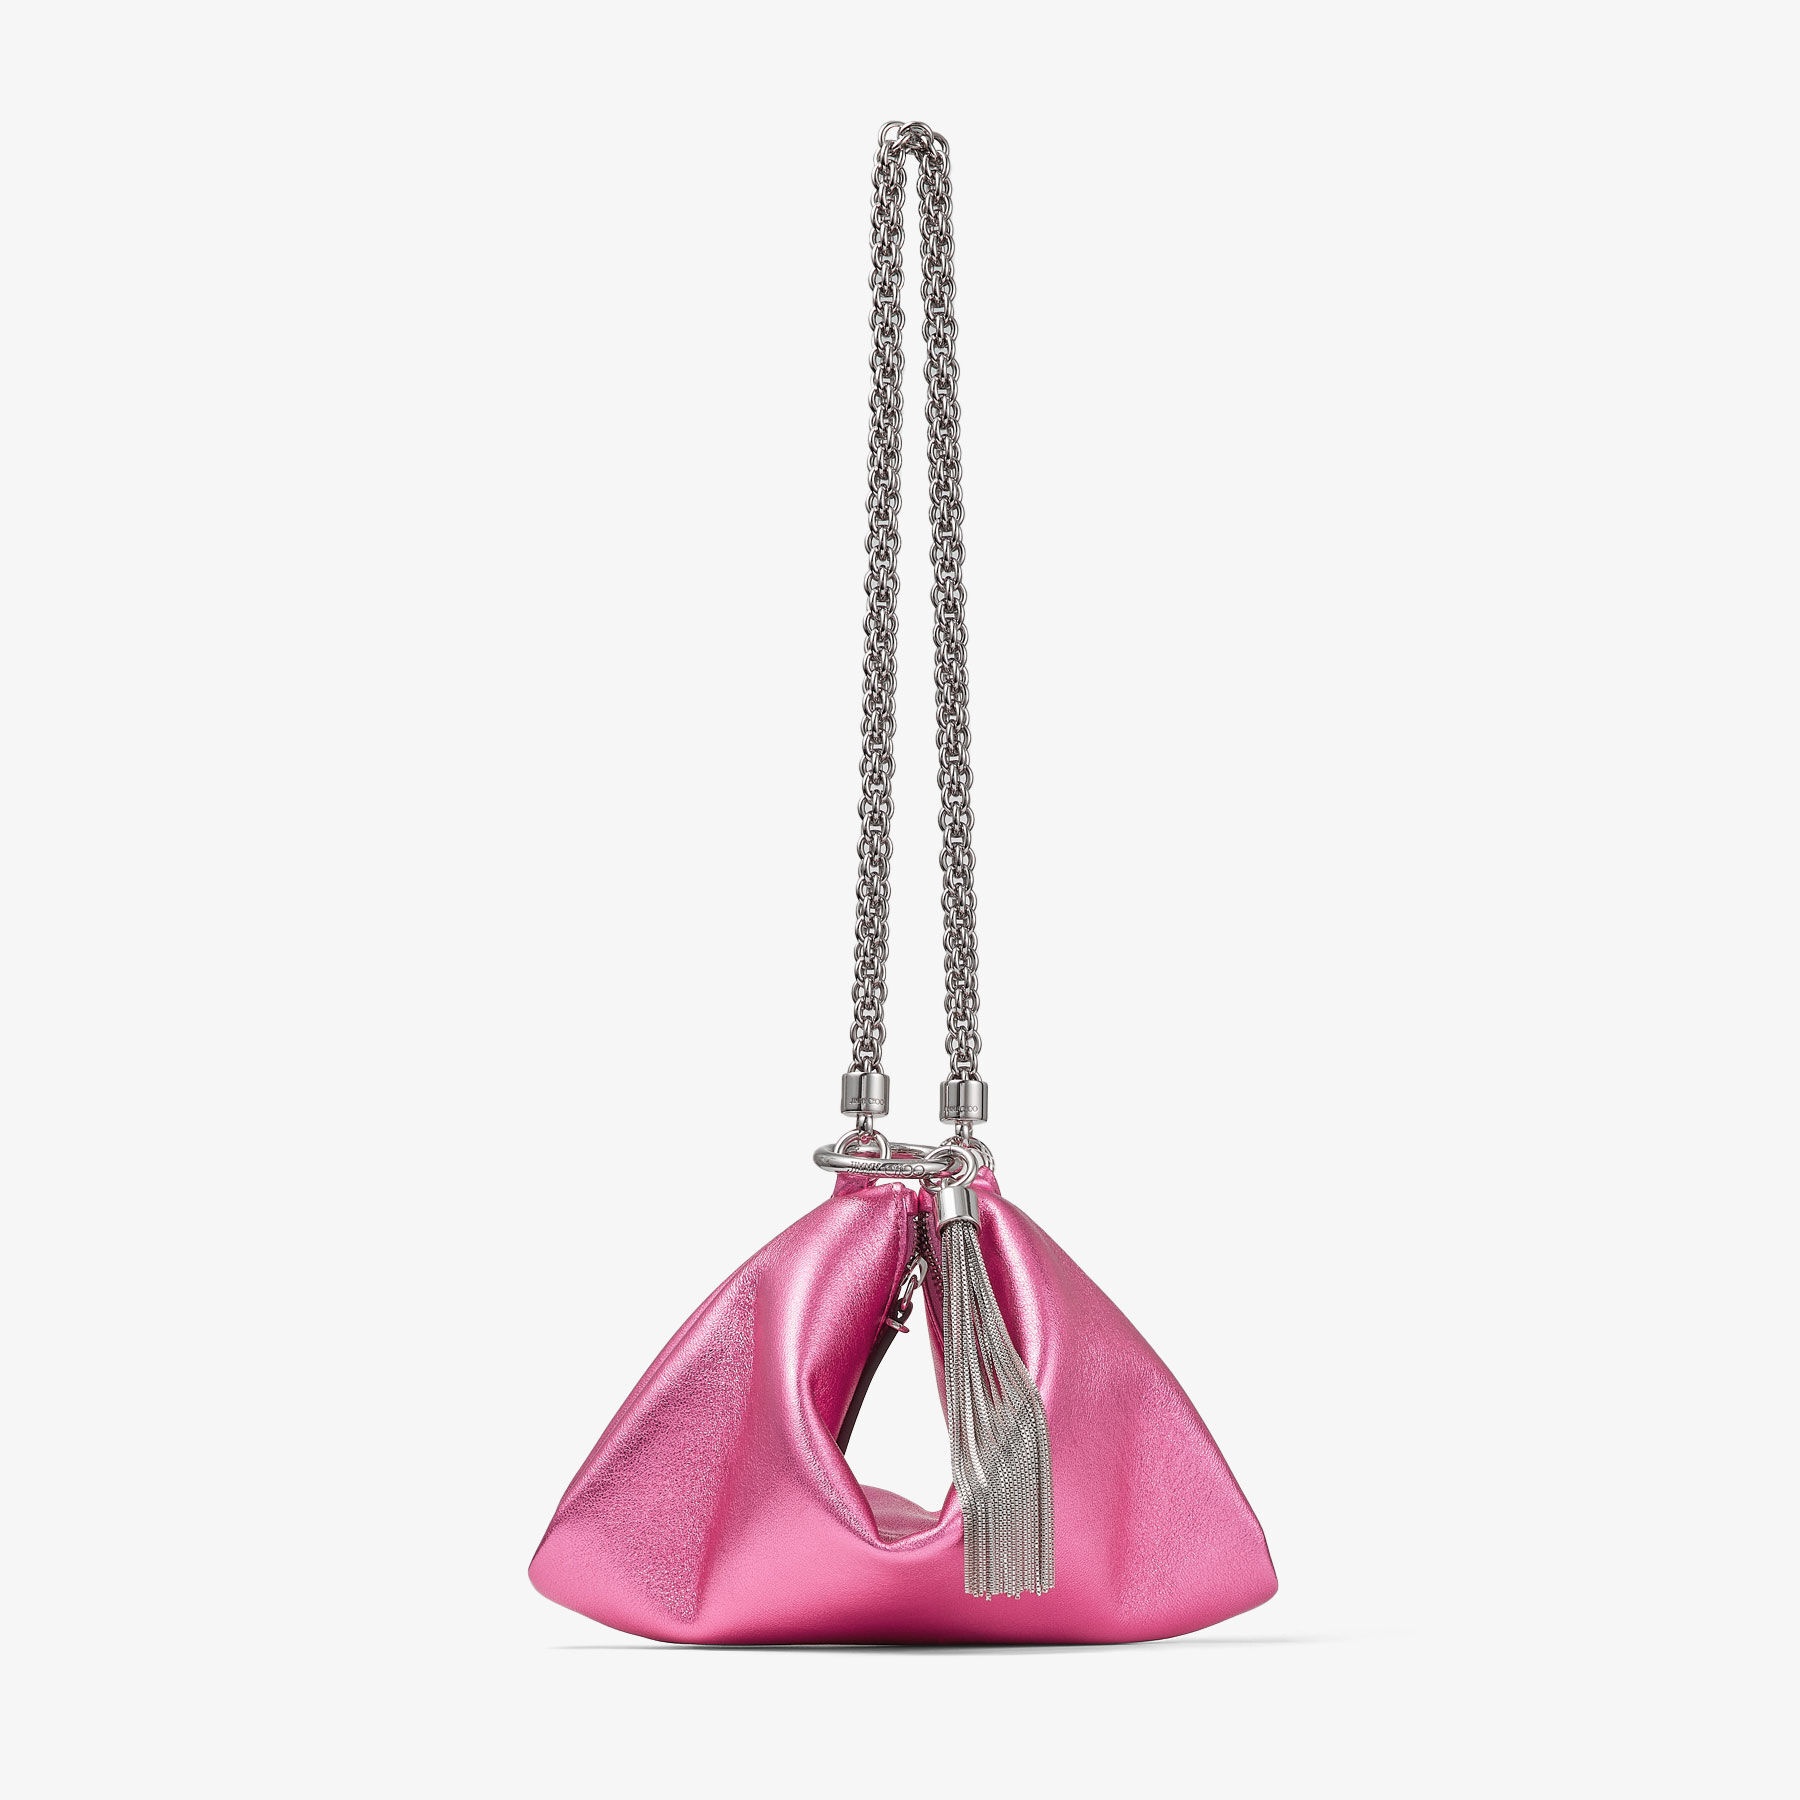 Callie Mini
Candy Pink Metallic Nappa Leather Mini Clutch Bag - 1